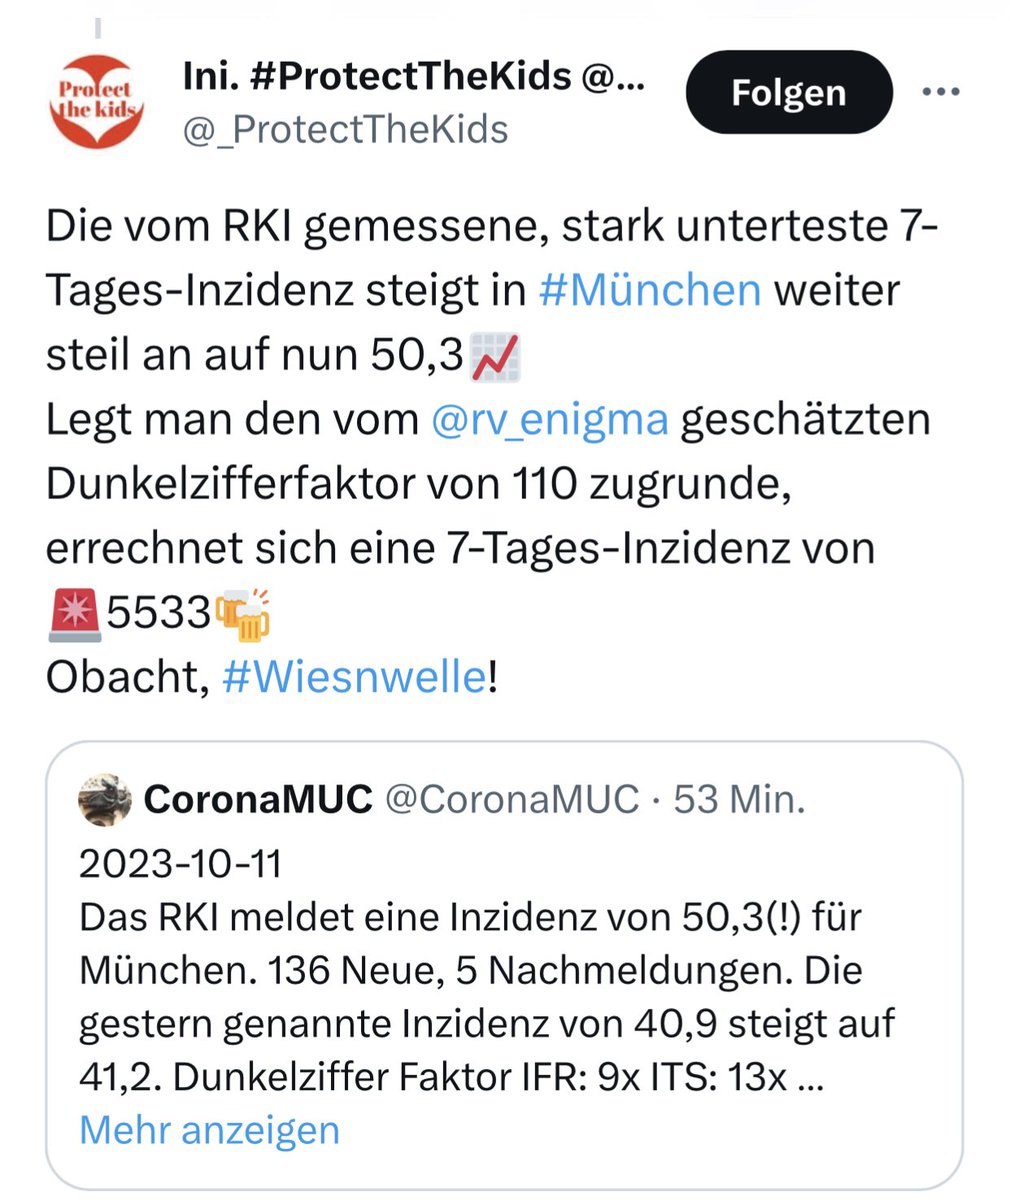 Achtung, Münchner. Covid is not over. Die Dunkelzifferinzidenz beträgt 5.533. 
#Corona #wahndemie